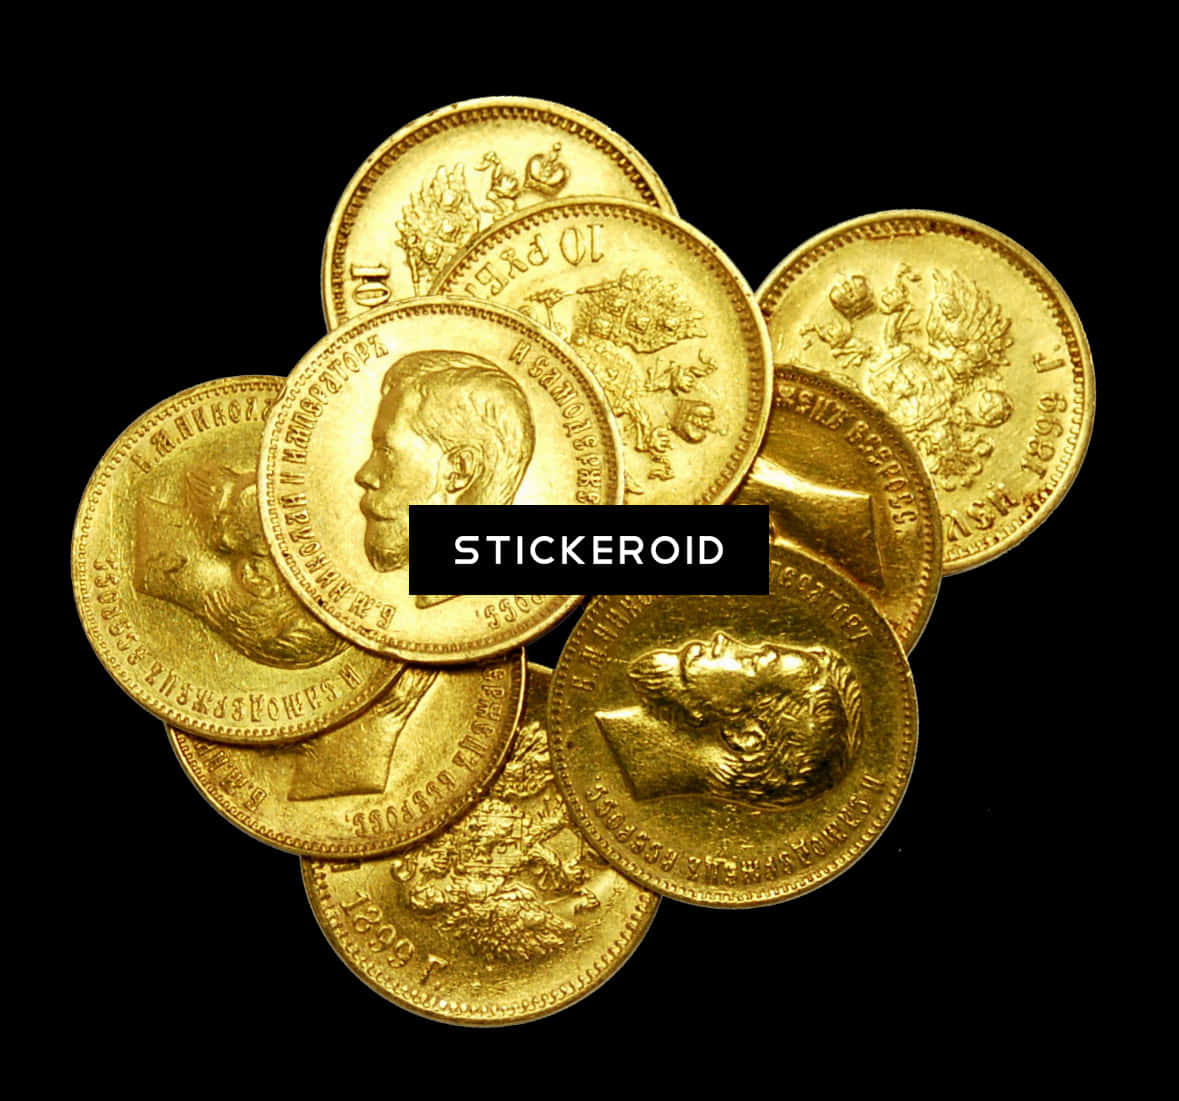 Antique Gold Coins Collection